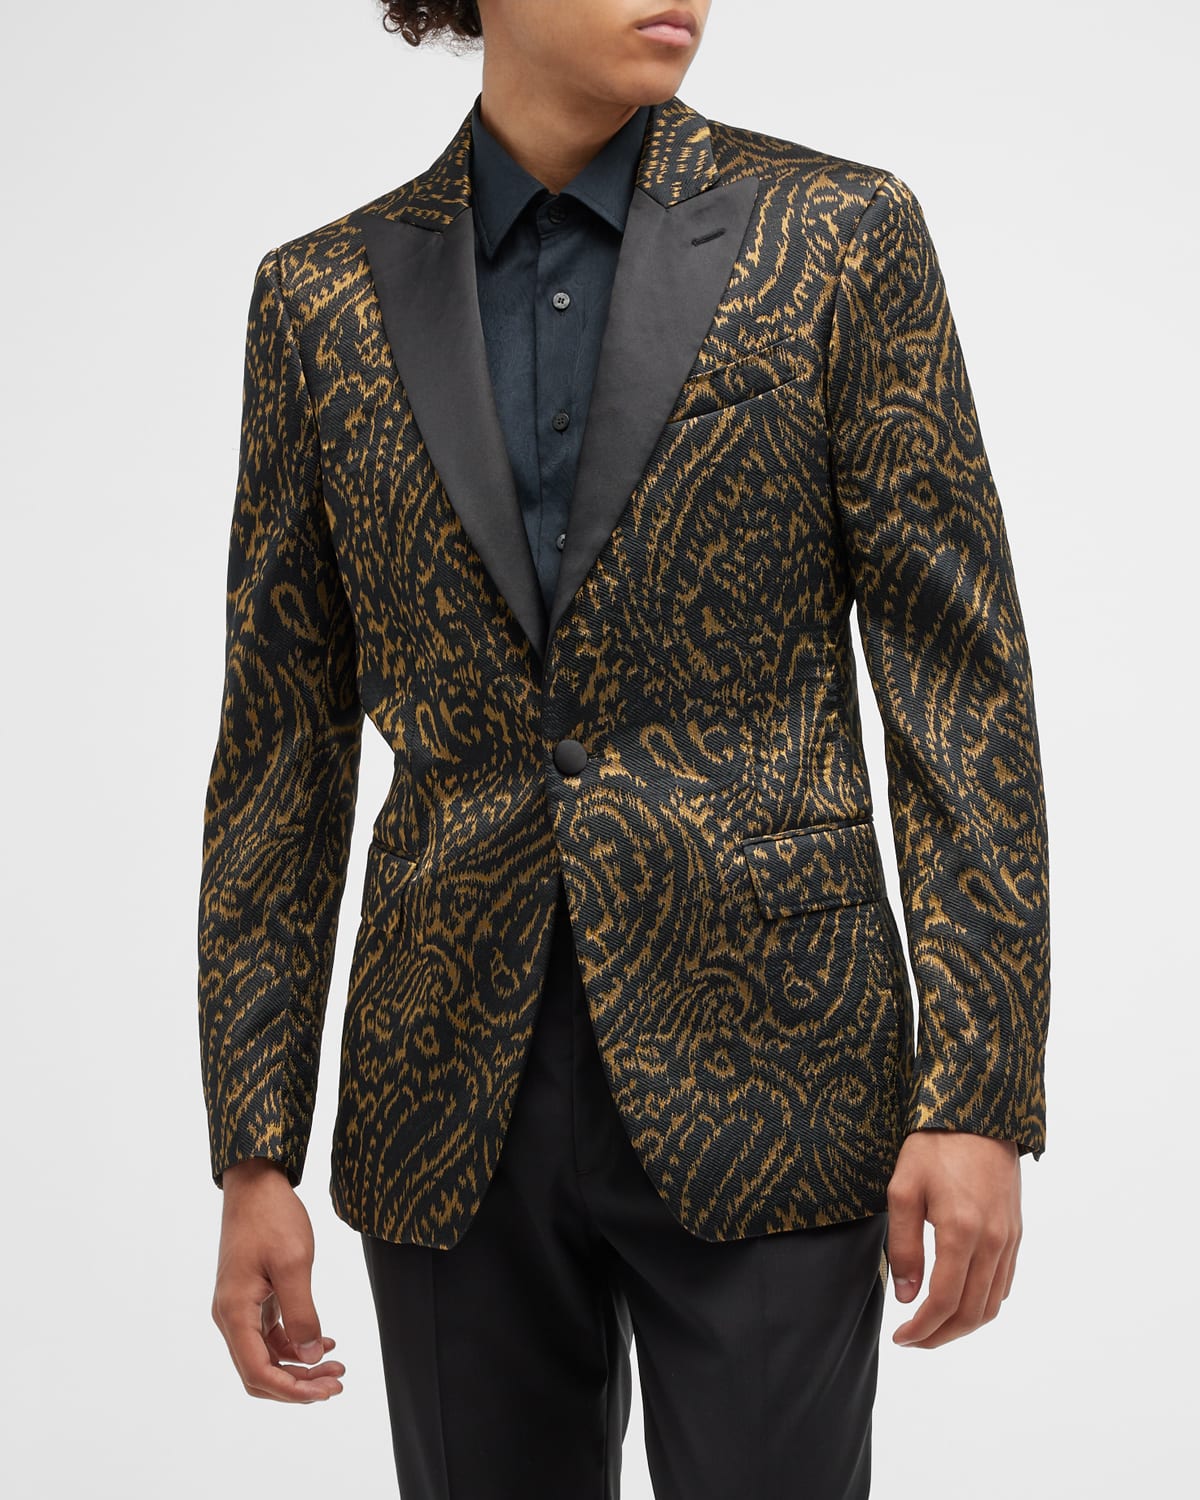 Men's Fuji Lurex Tapestry Tuxedo Jacket